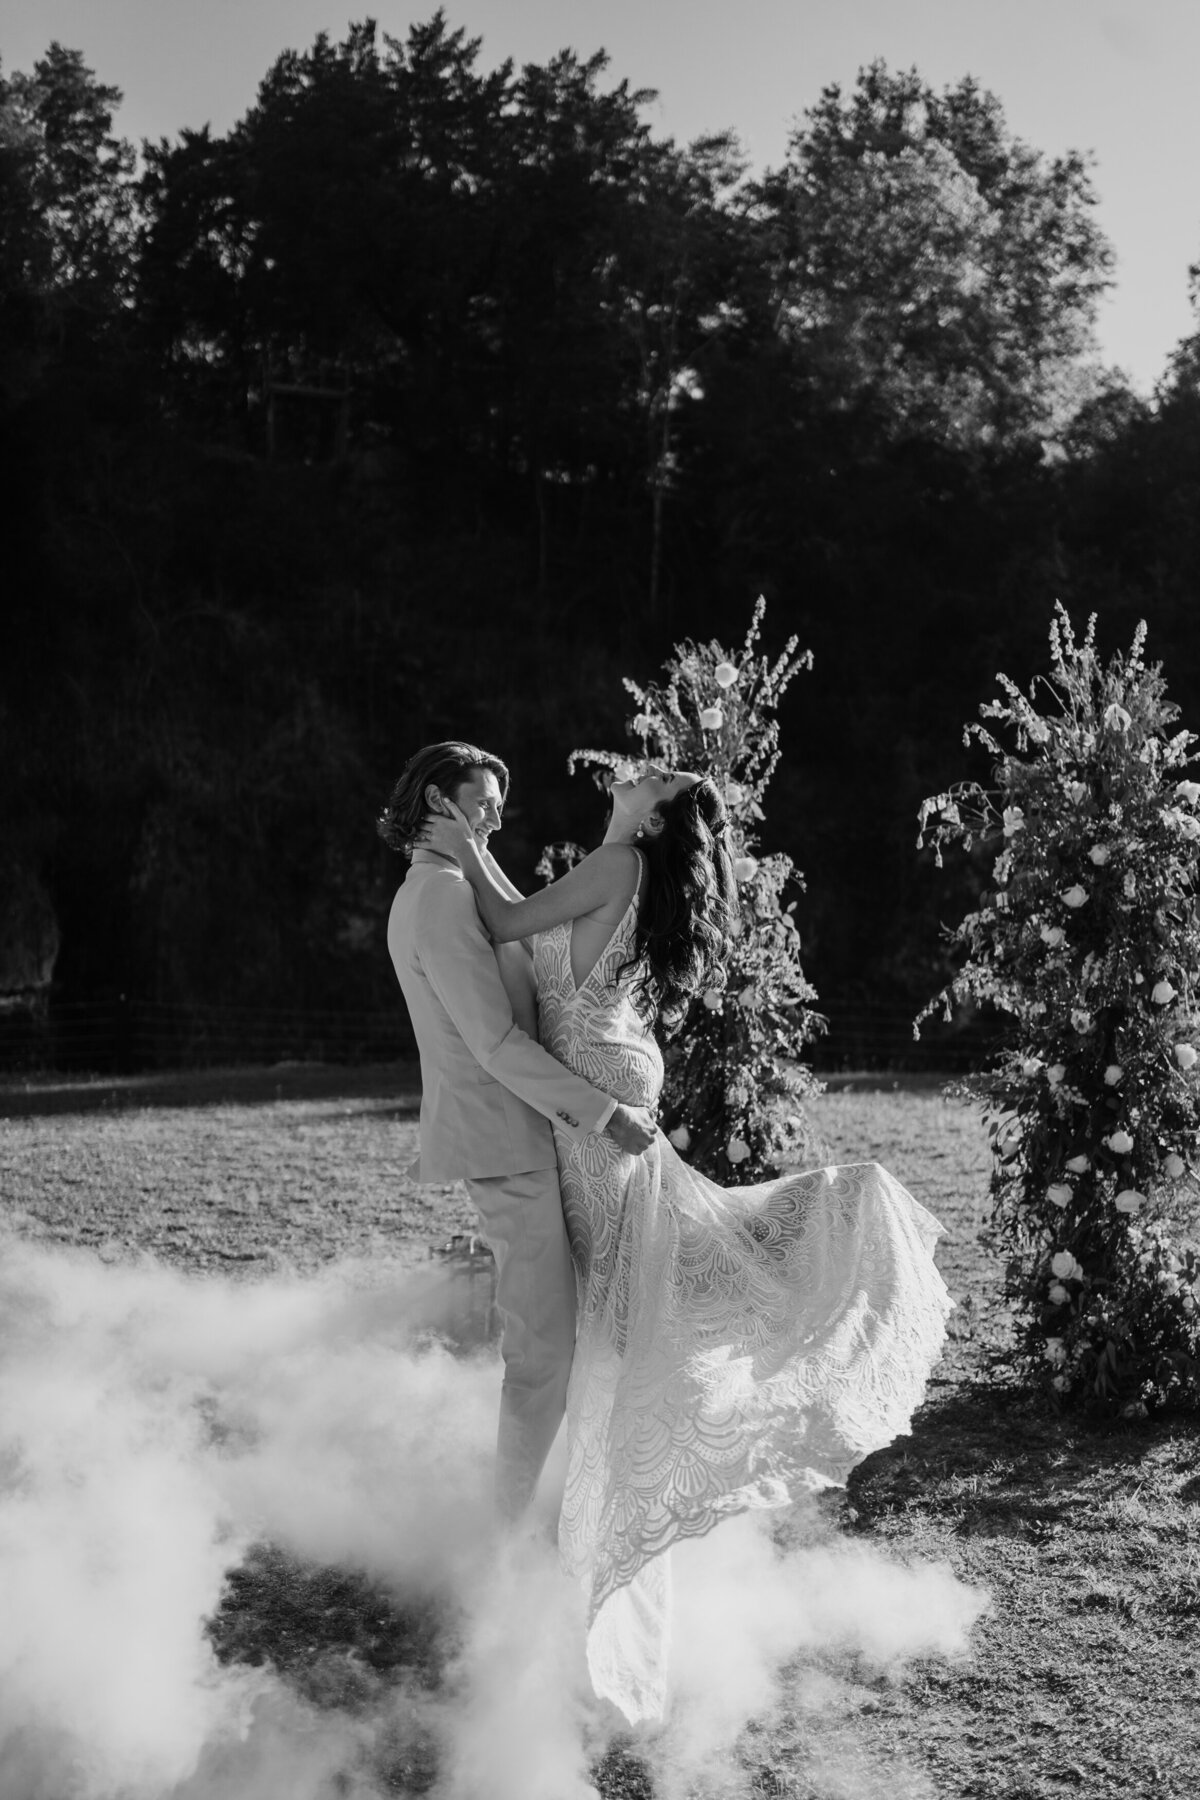 Aspen-Avenue-Florida-Wedding-Photographer-White-Rock-Canyon-Save-The-Date-Florida-Rentals-by-rw-events-romantic-bride-groom-ceremony-fog-machine